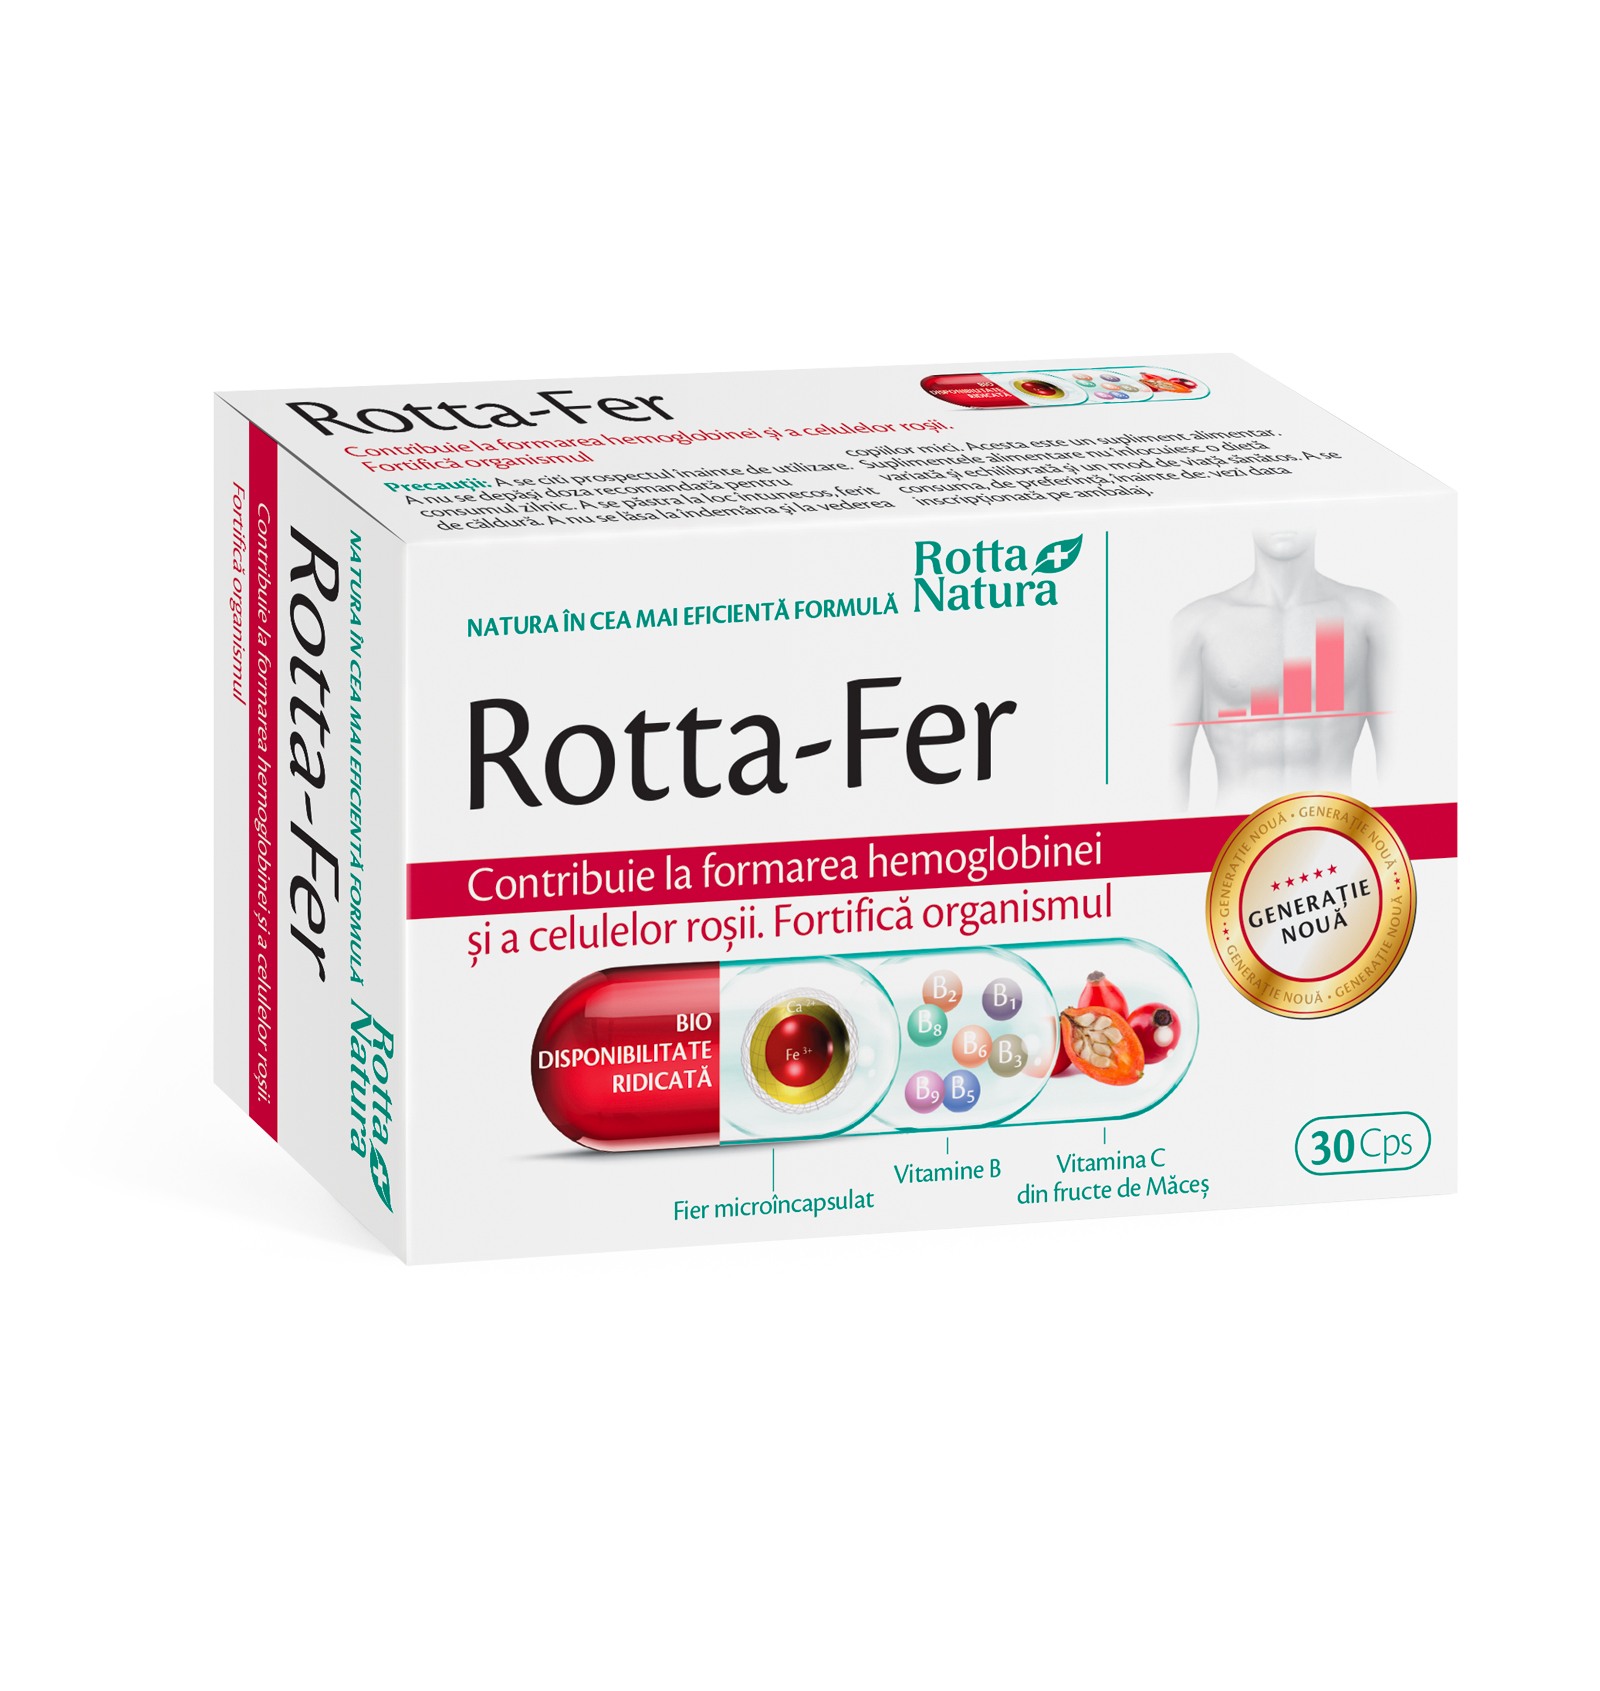 Adulti - Rotta-Fer, 30 capsule, Rotta Natura, sinapis.ro